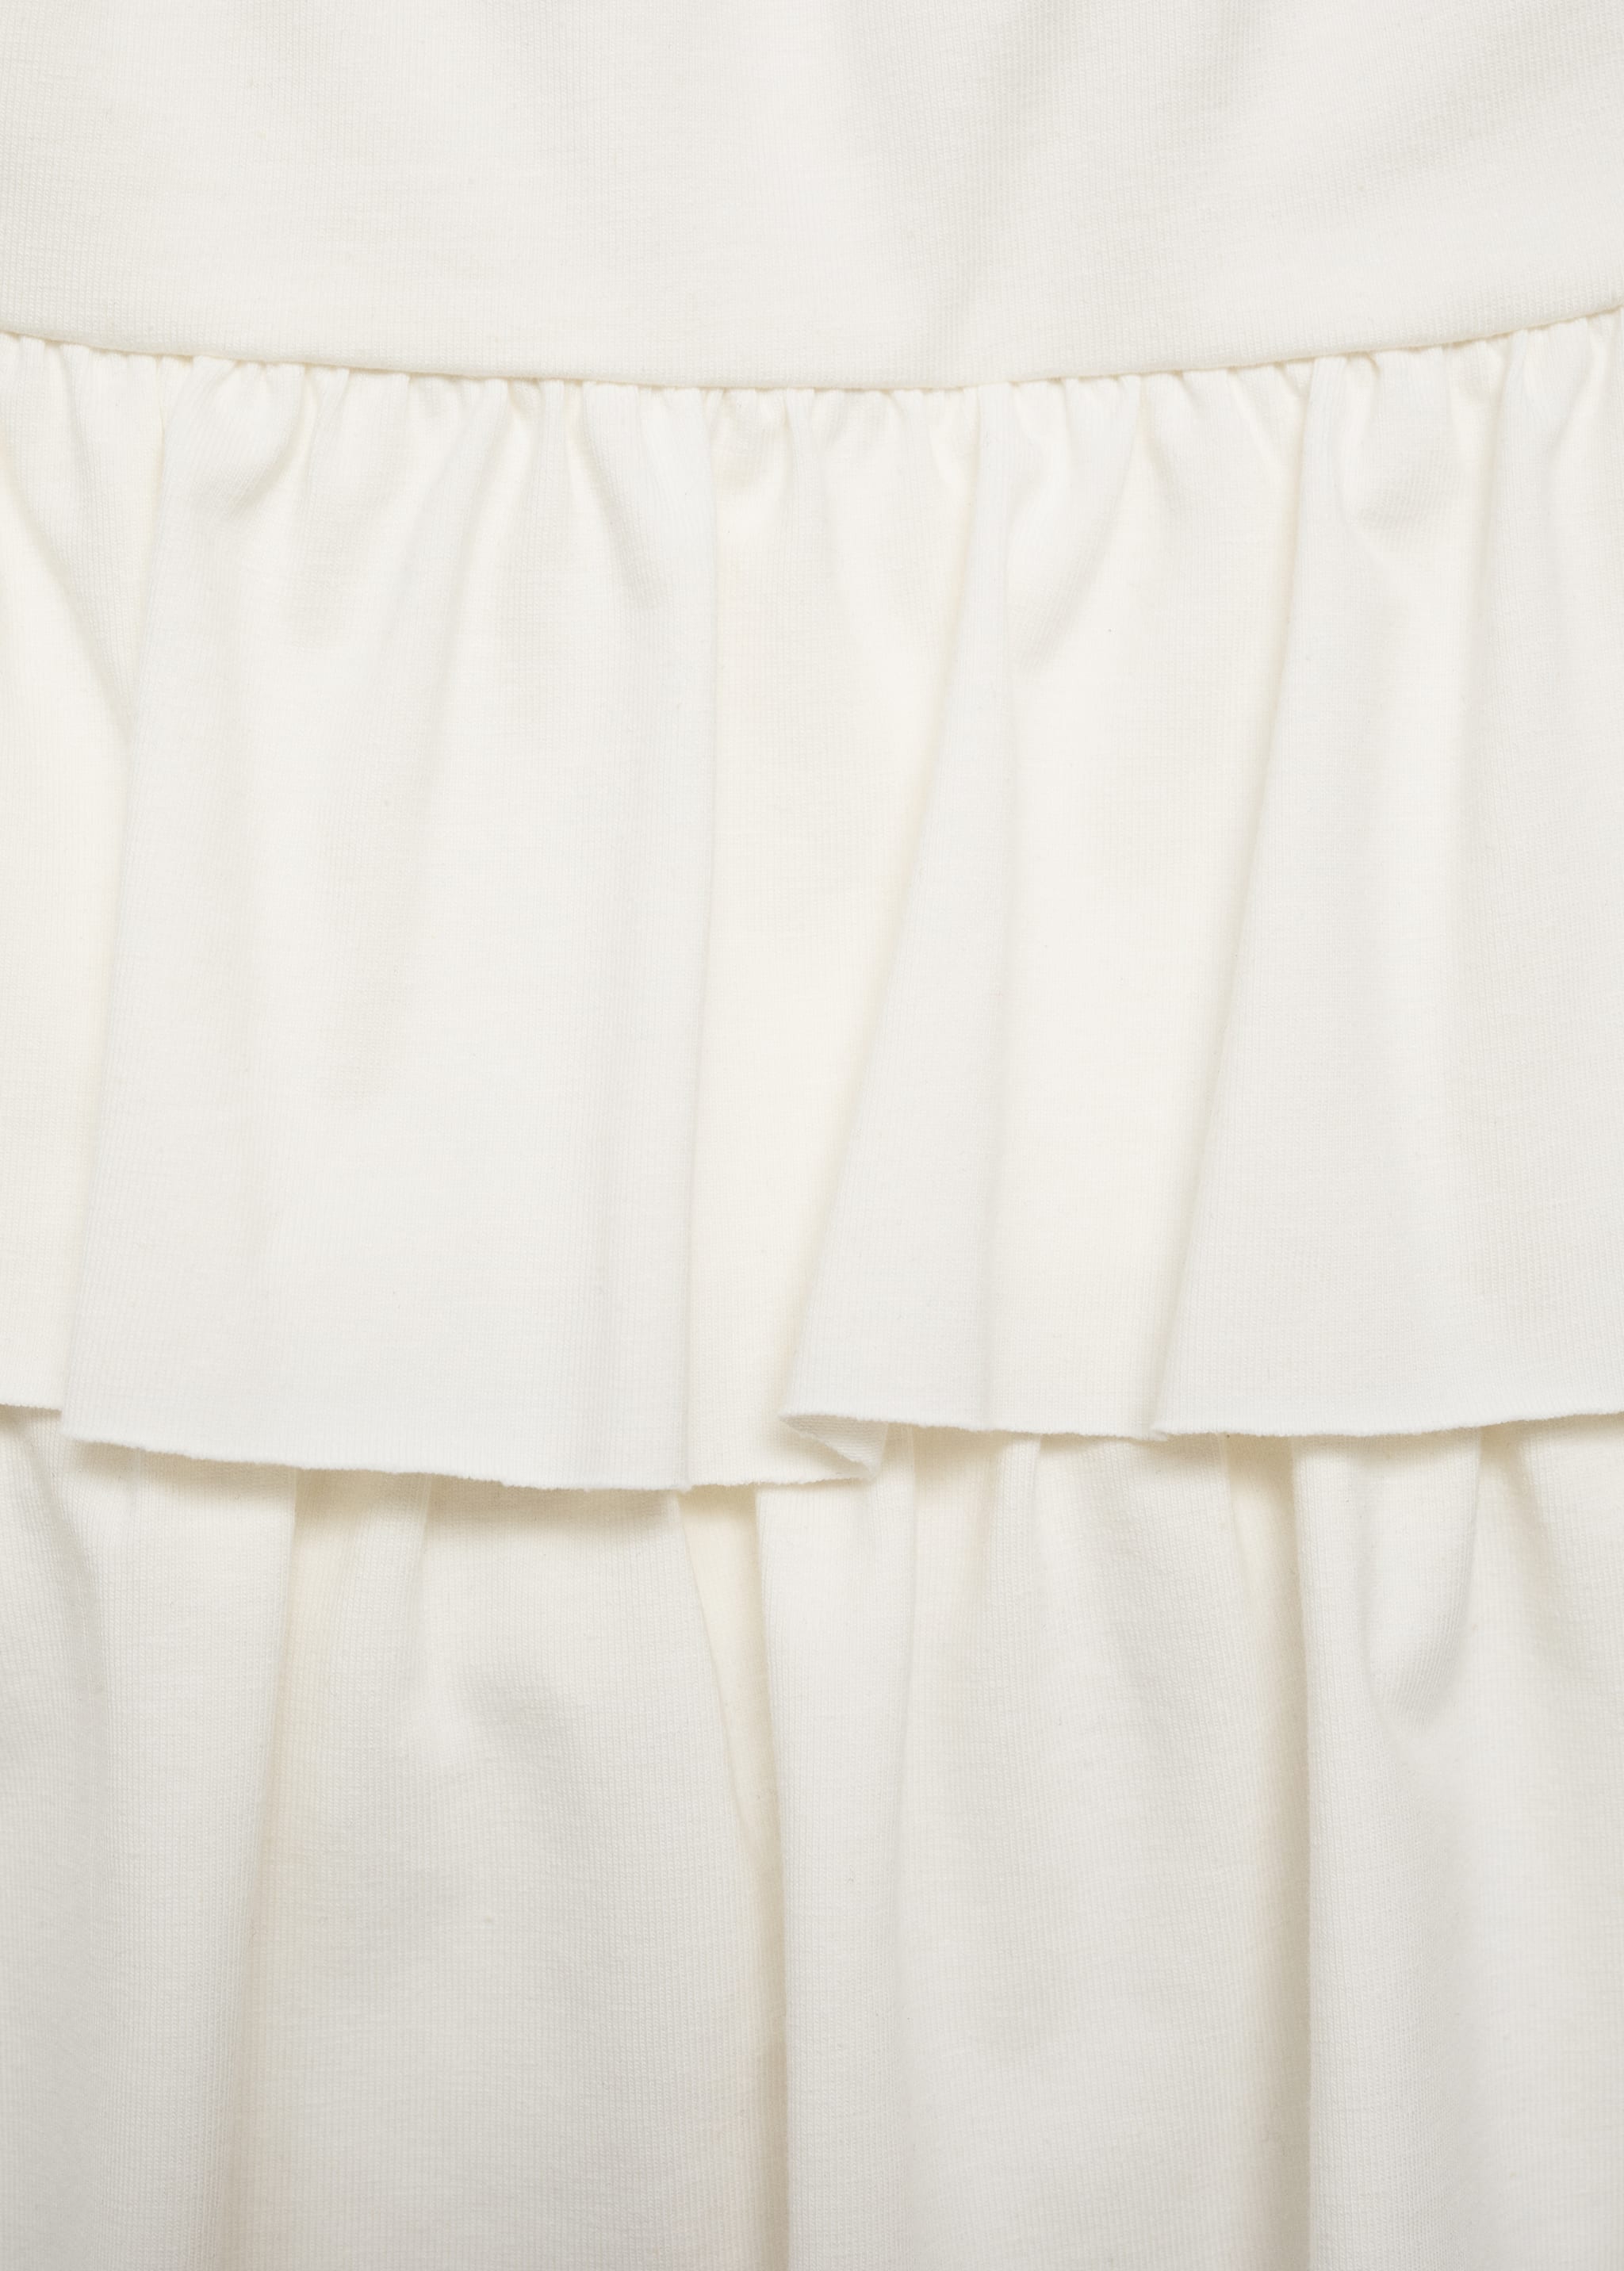 Ruffled trouser skirt - Details of the article 8